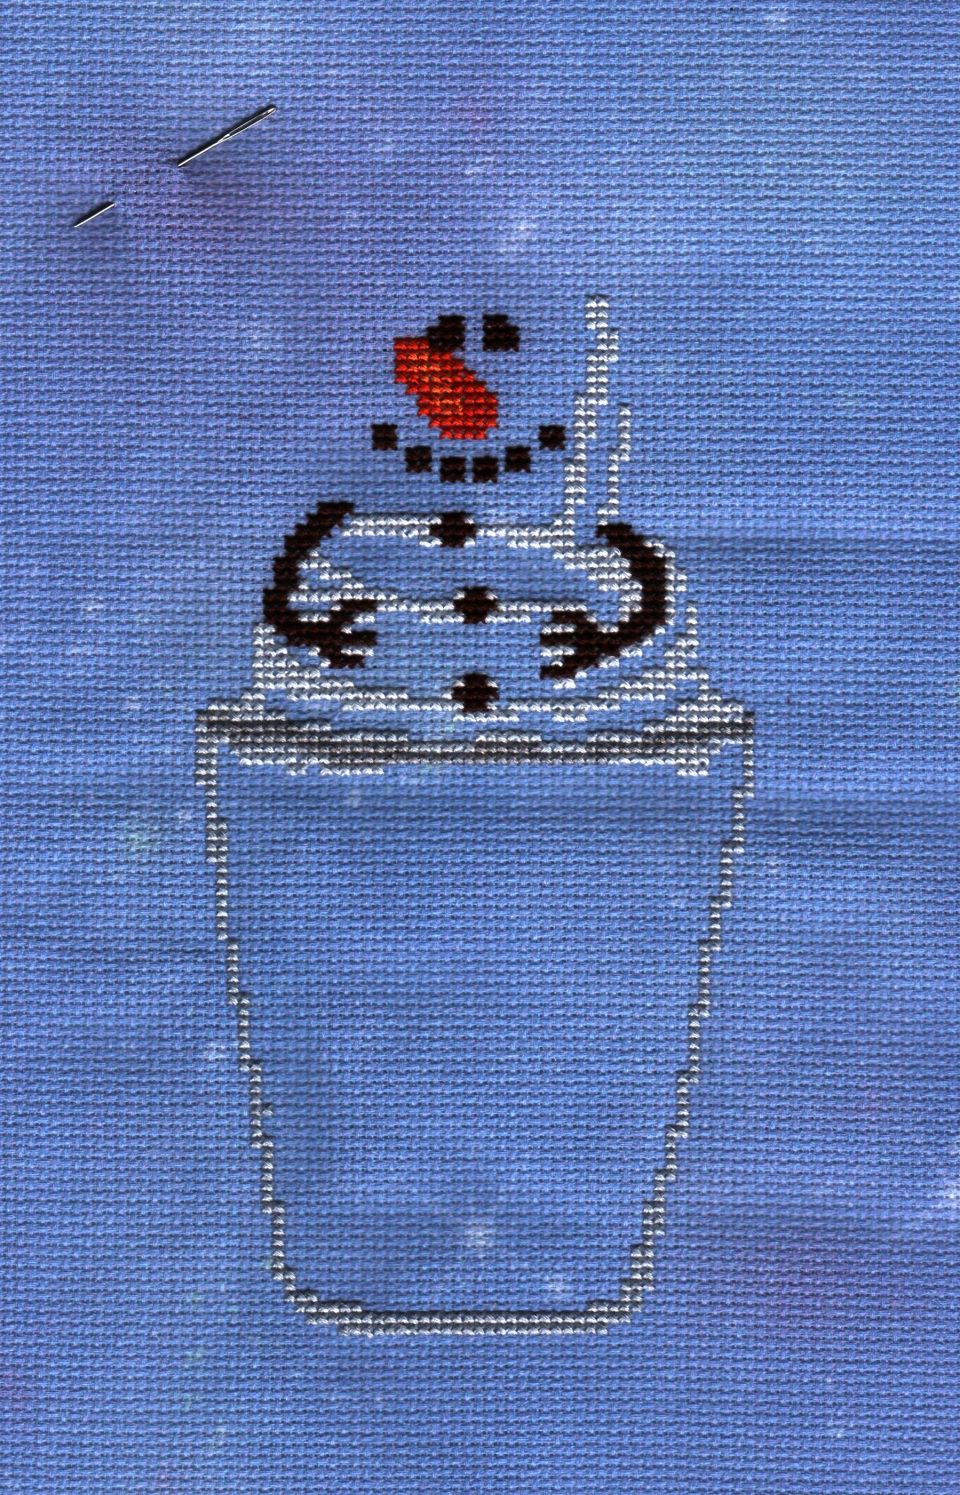 Snowman Delight Cross Stitch Wonder by Marcia Manning